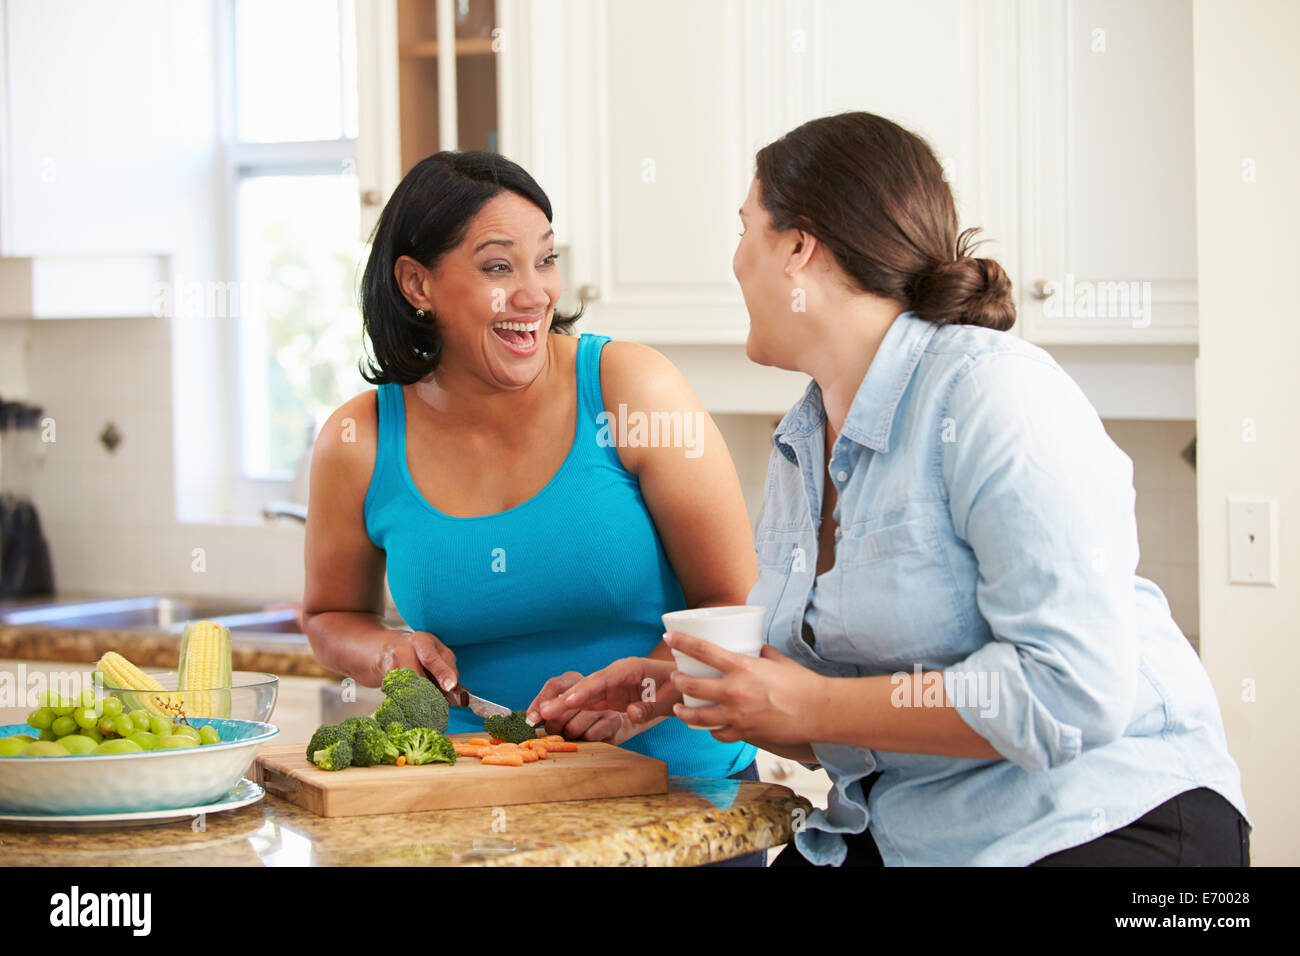 Two Overweight Women On Diet Preparing Vegetables in Kitchen Stock Photo